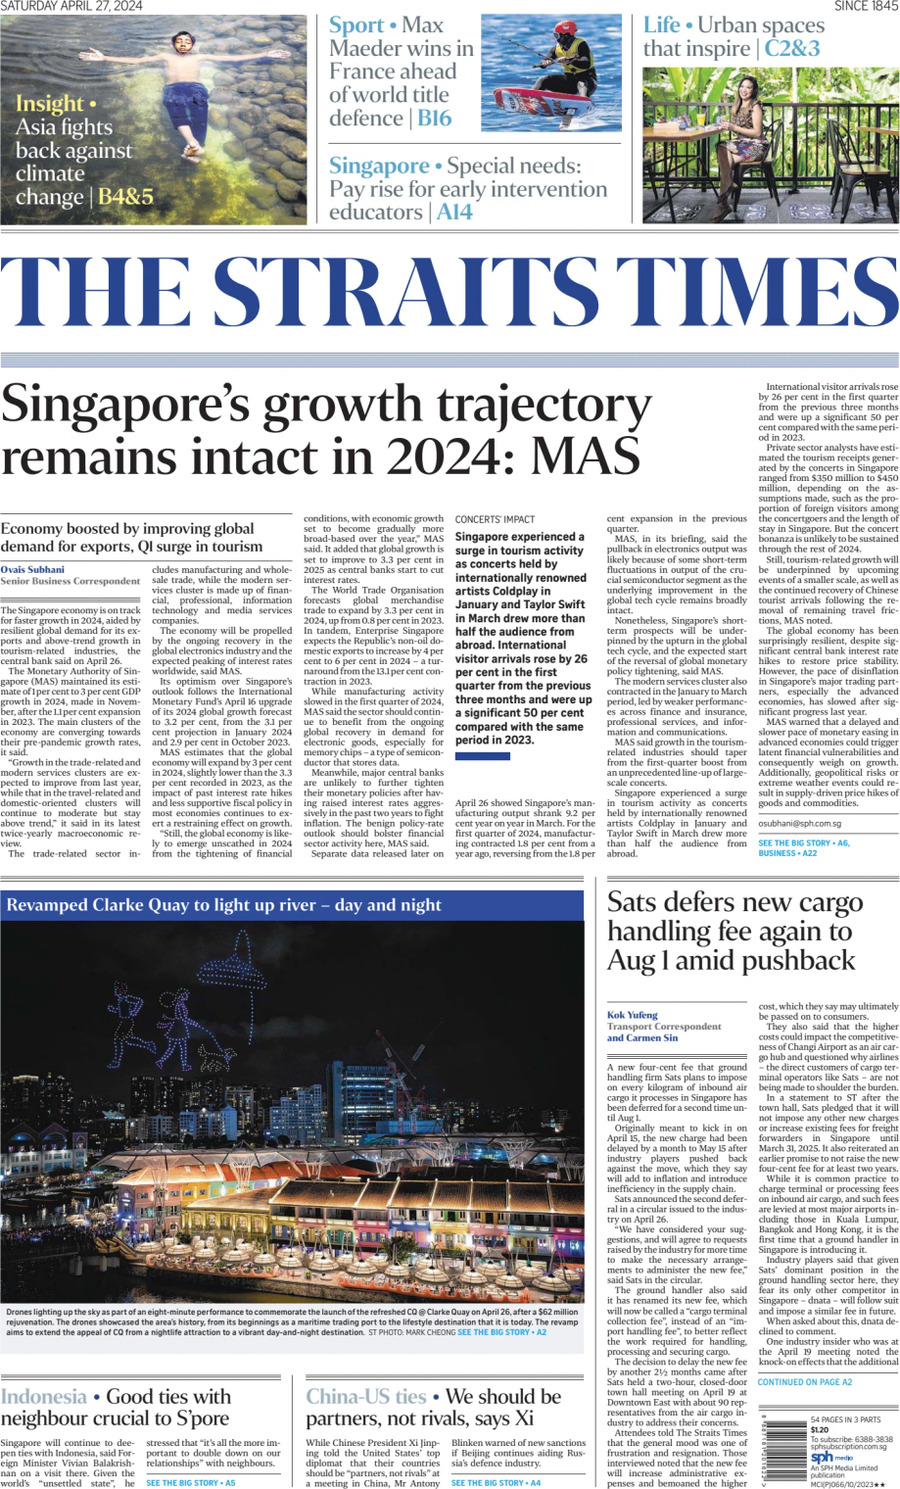 Prima Pagina The Straits Times 27/04/2024